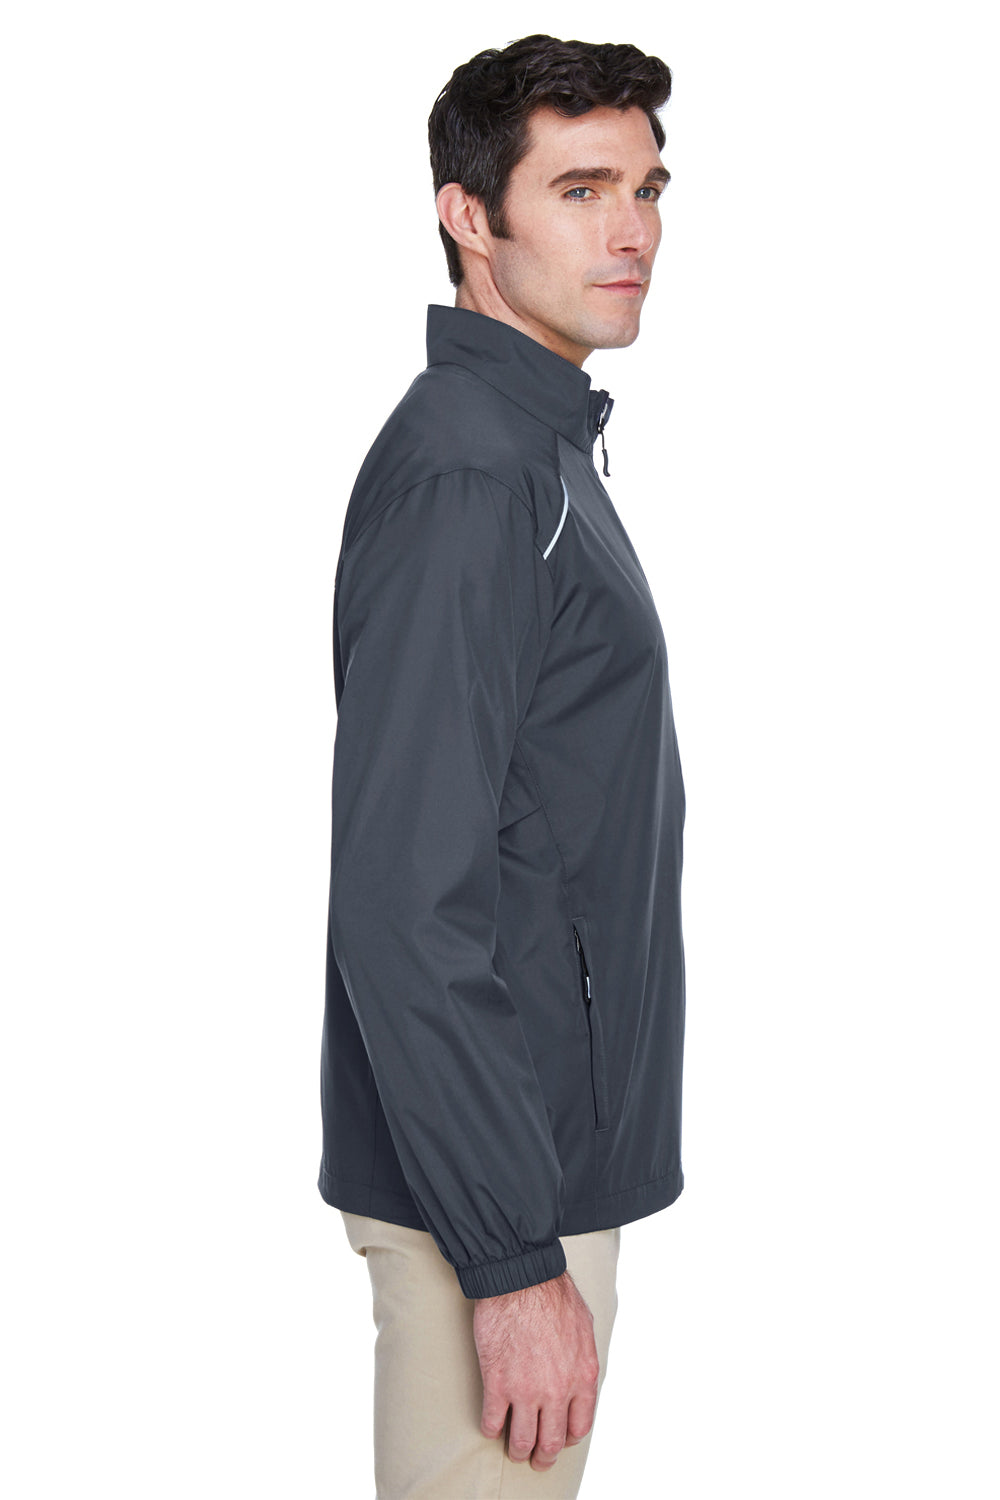 Core 365 88183 Mens Motivate Water Resistant Full Zip Jacket Carbon Grey Side